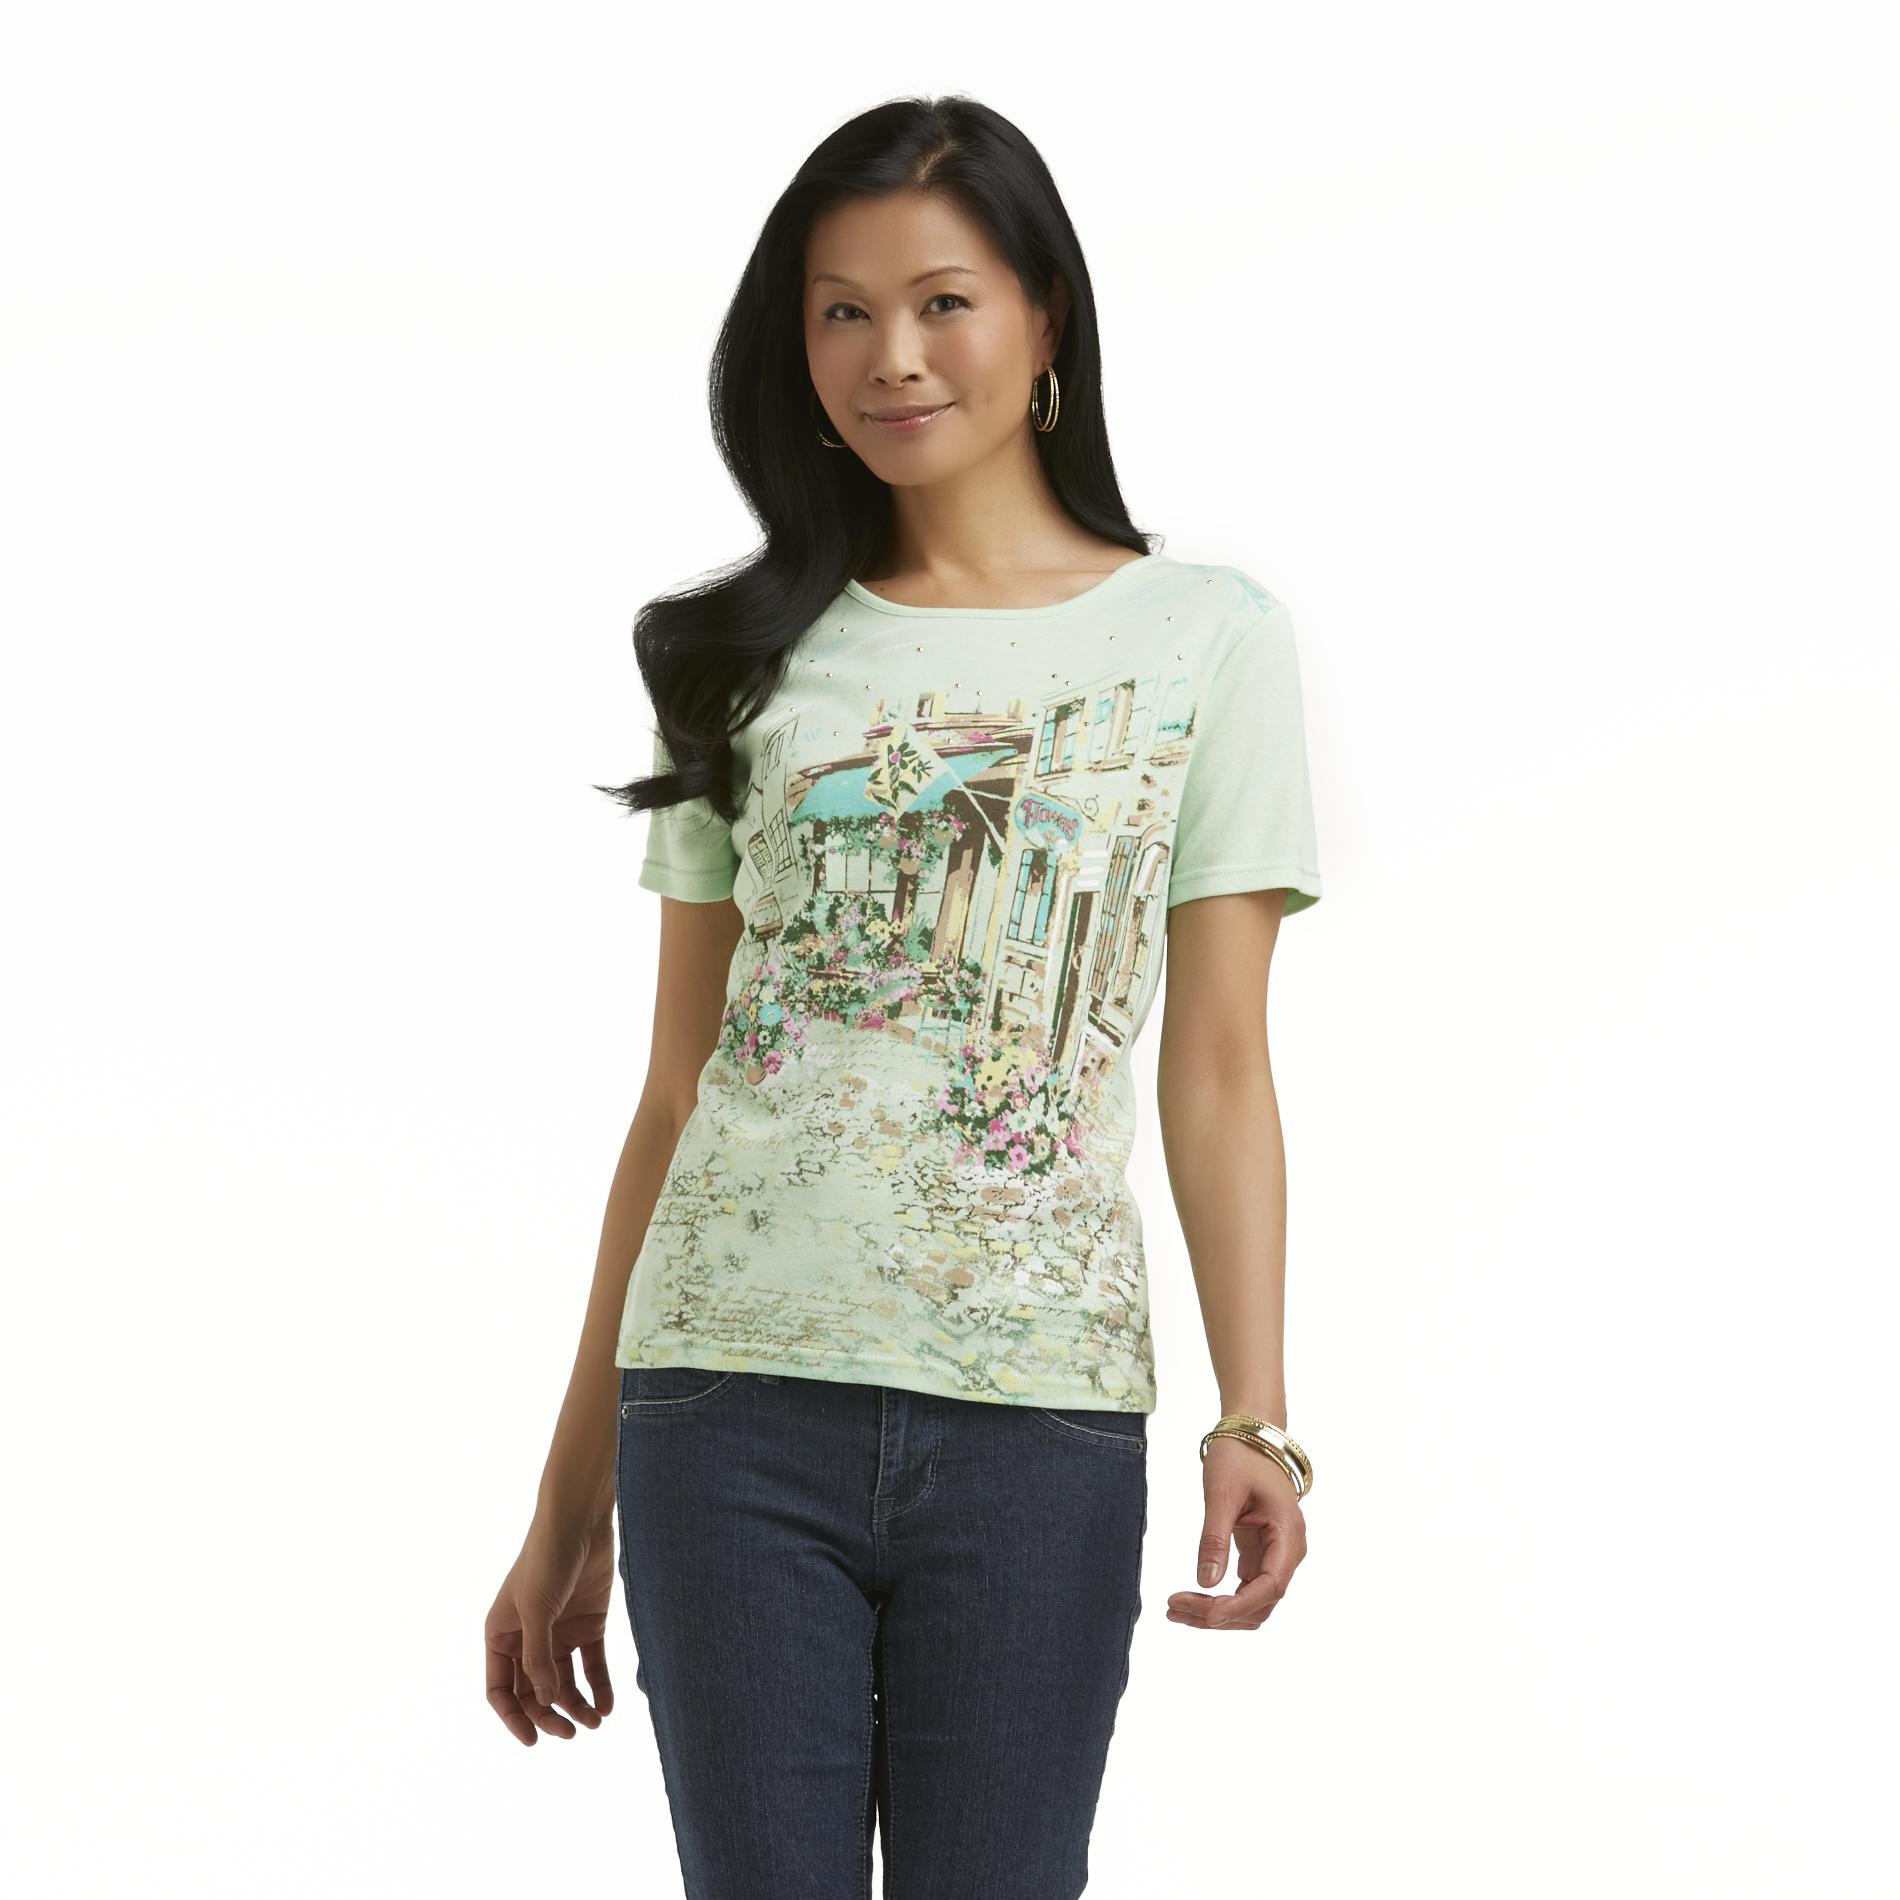 Basic Editions Women's Studded Graphic T-Shirt - Village Street